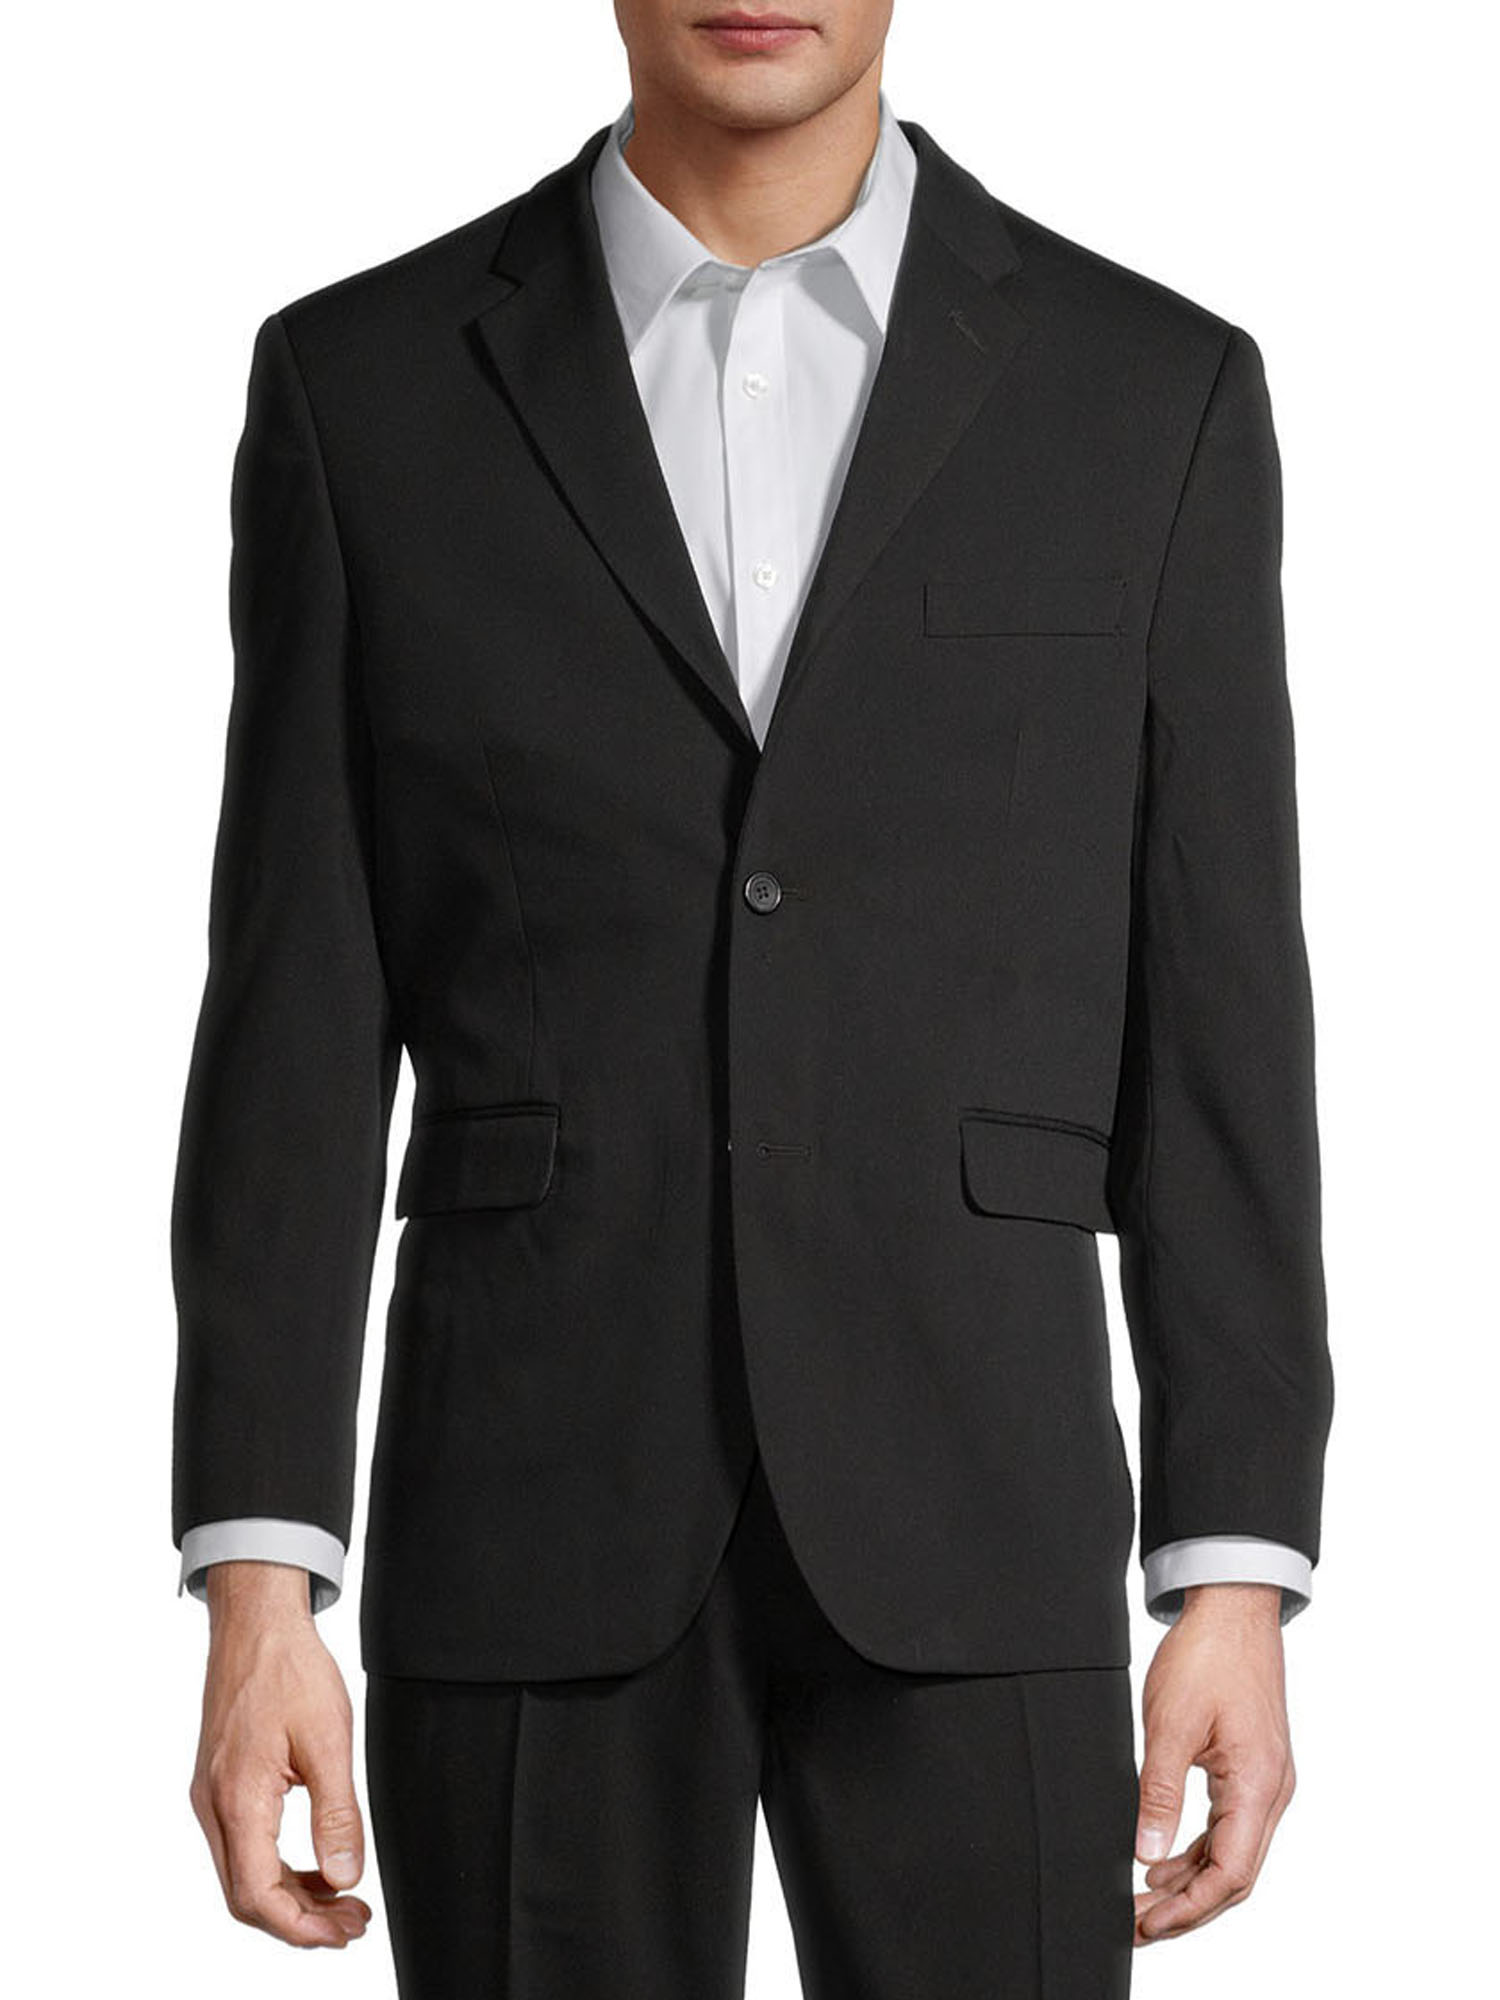 George Men's Performance Comfort Flex Suit Jacket - image 1 of 6